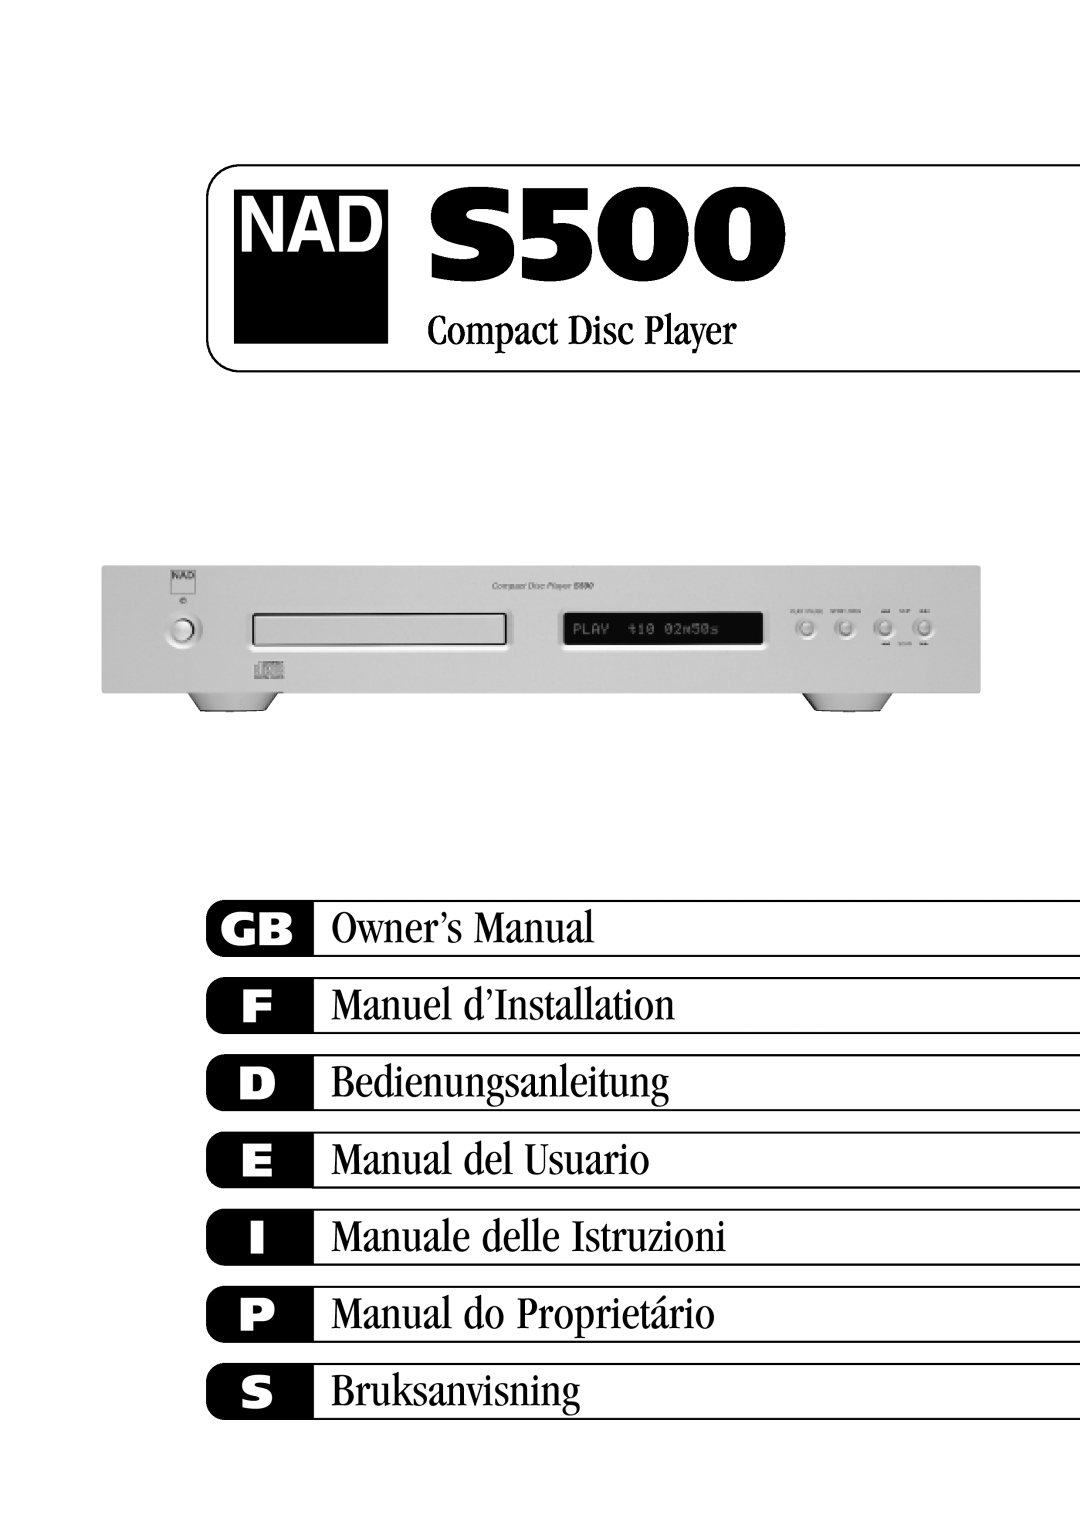 NAD S500 owner manual Gb F D E I P S, Bedienungsanleitung Manual del Usuario, Bruksanvisning, Compact Disc Player 